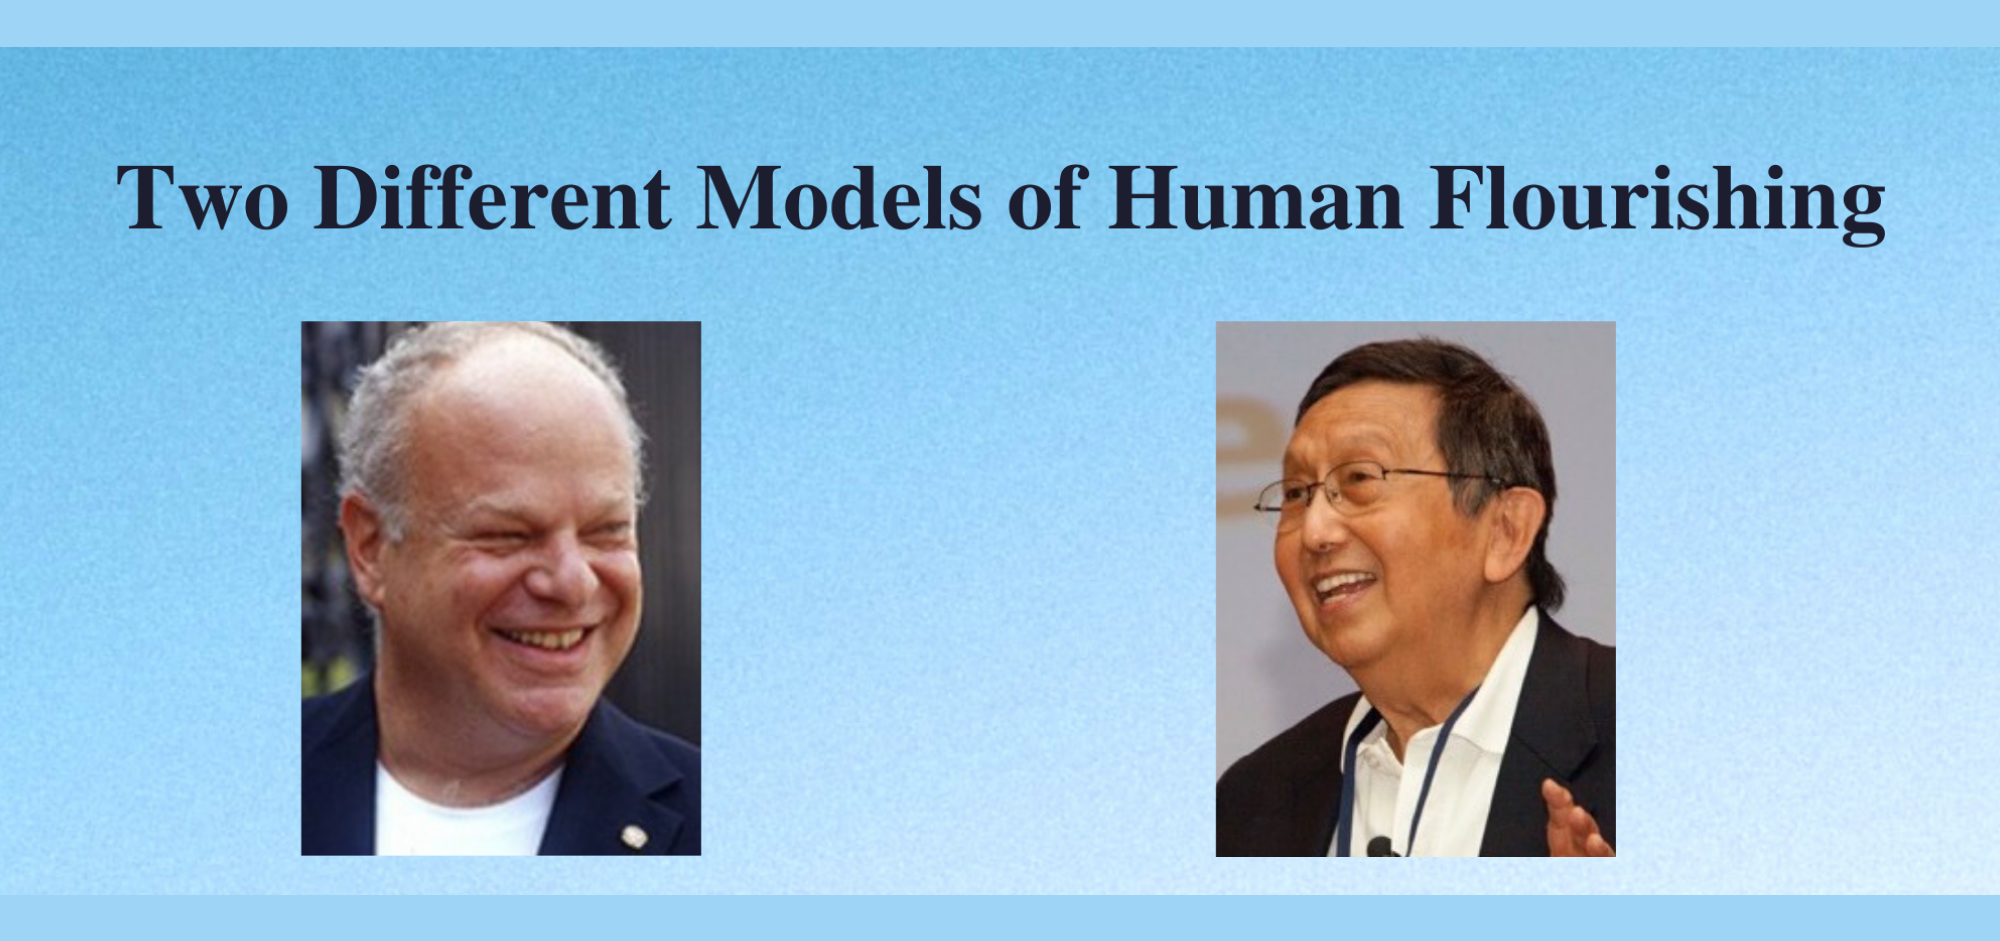 Two Different Models of Human Flourishing: Seligman’s PERMA Model Versus Wong’s Self-transcendence Model